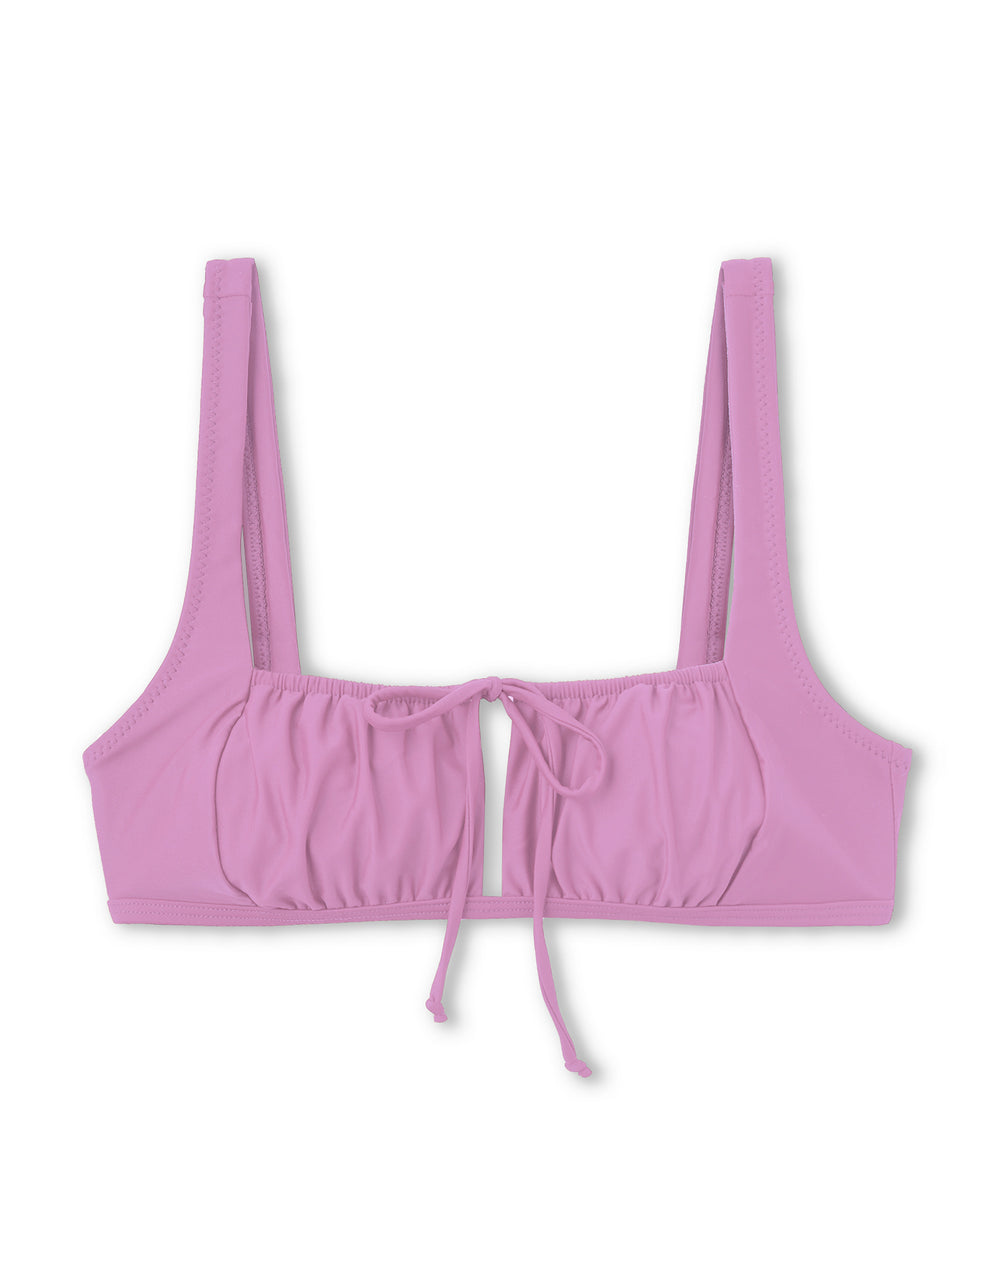 Curvy Sweetie Bralette in Pink Lilly – Underpinnings Lingerie